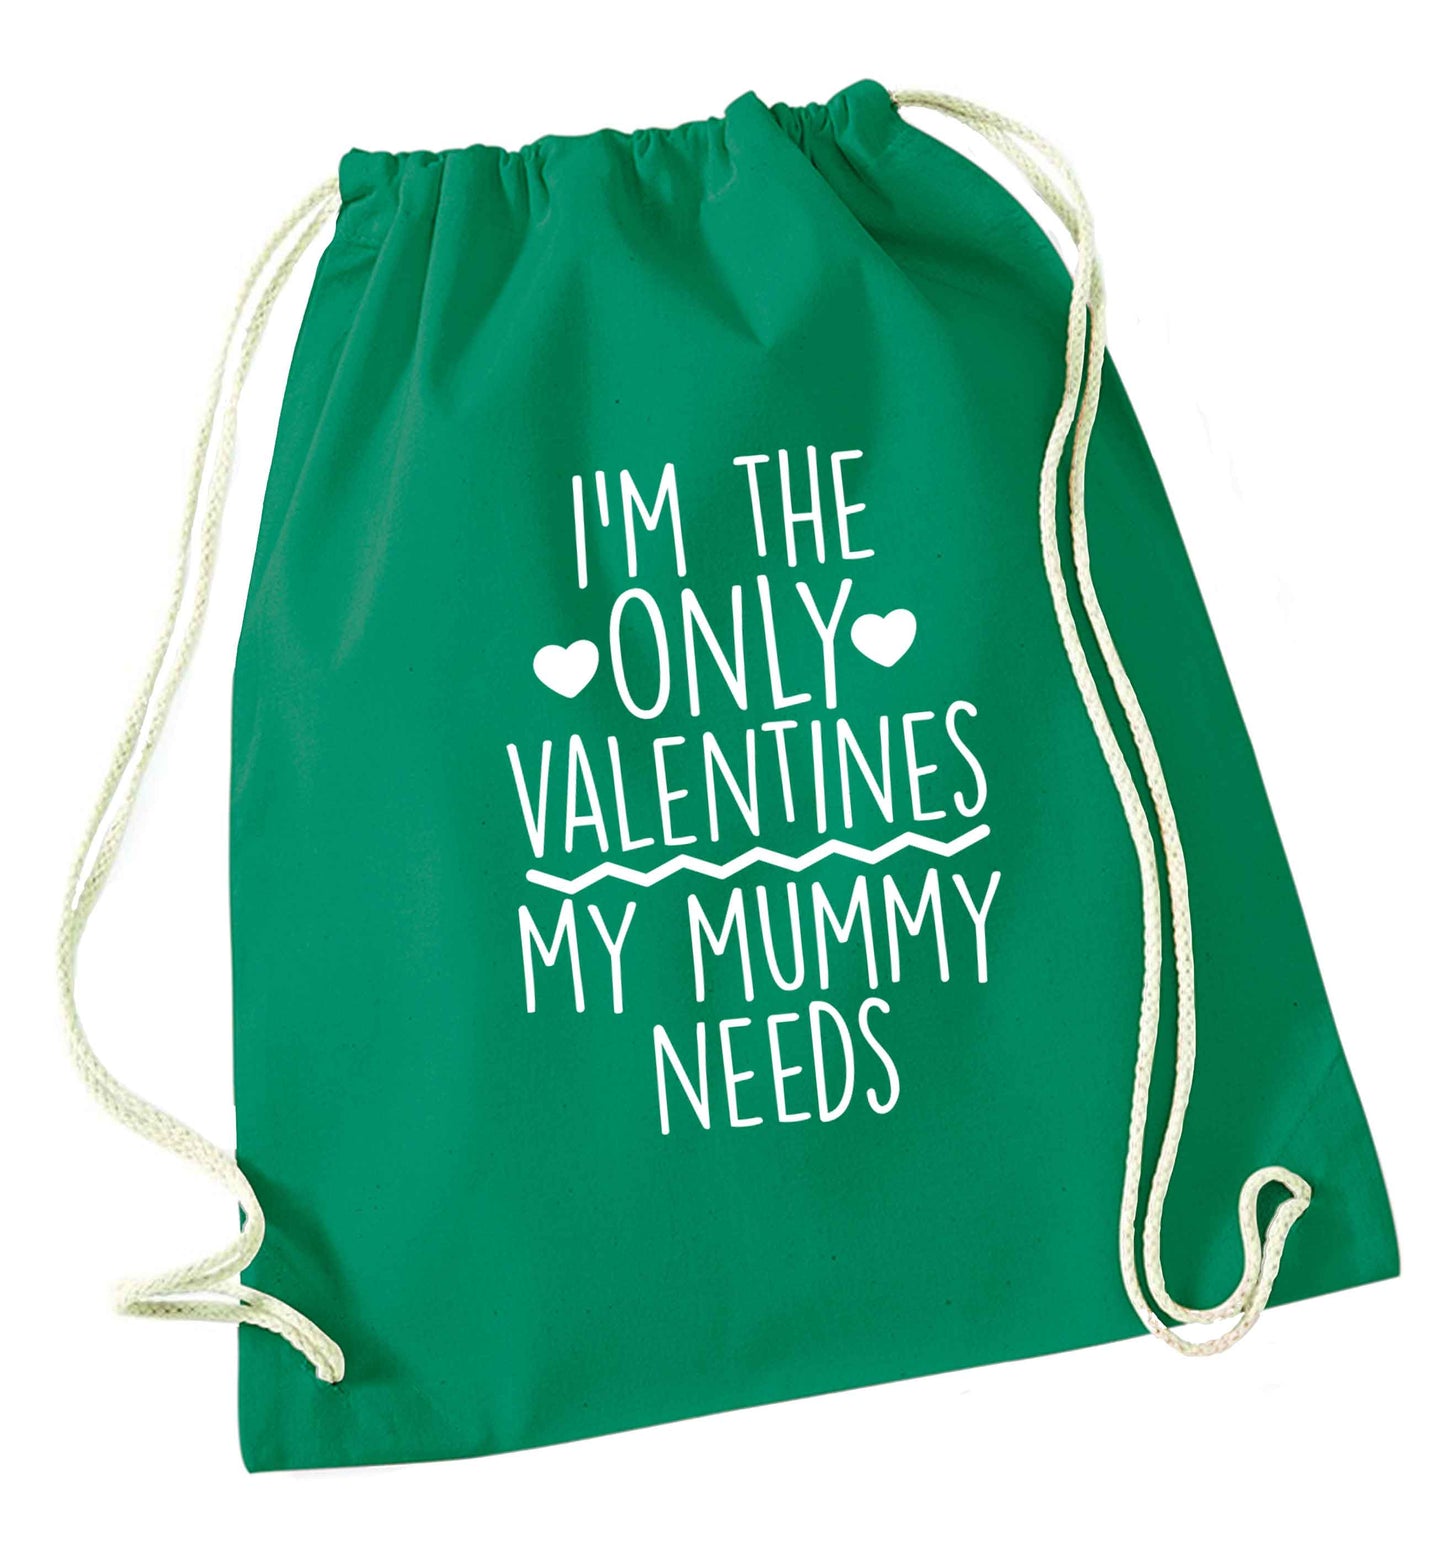 I'm the only valentines my mummy needs green drawstring bag